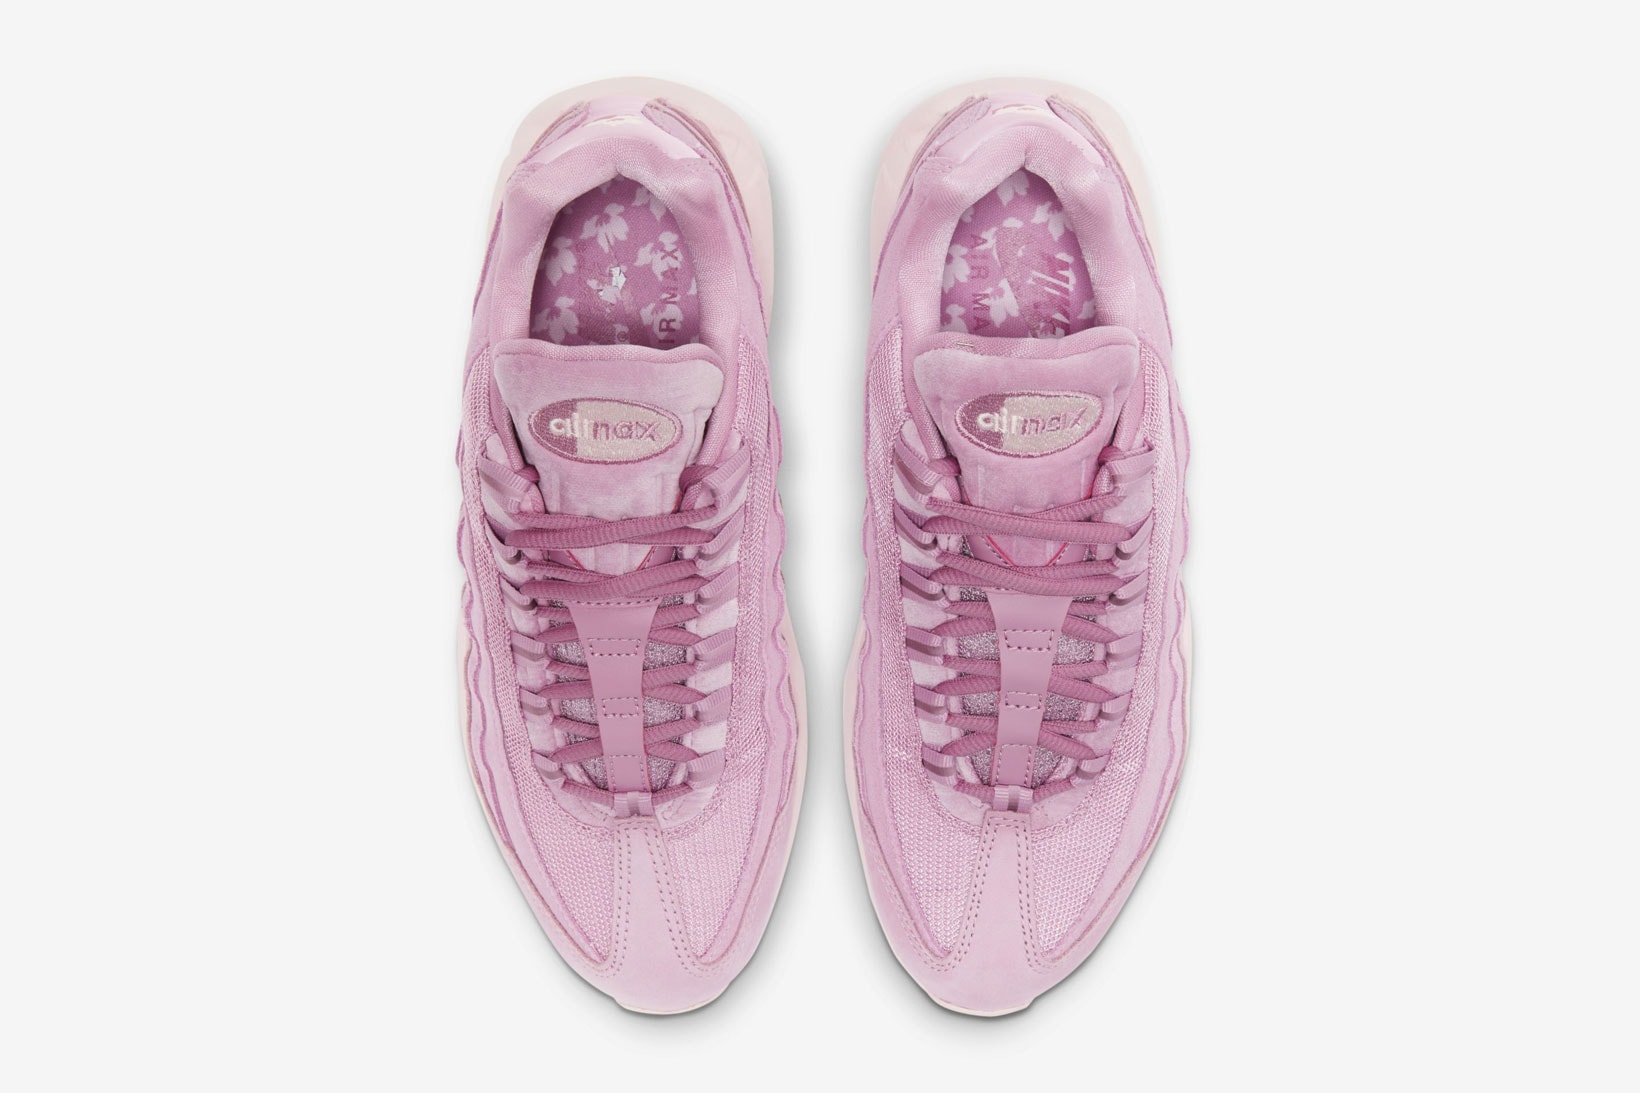 nike air max 95 am95 se mugunghwa korean flower fireberry pink womens sneakers